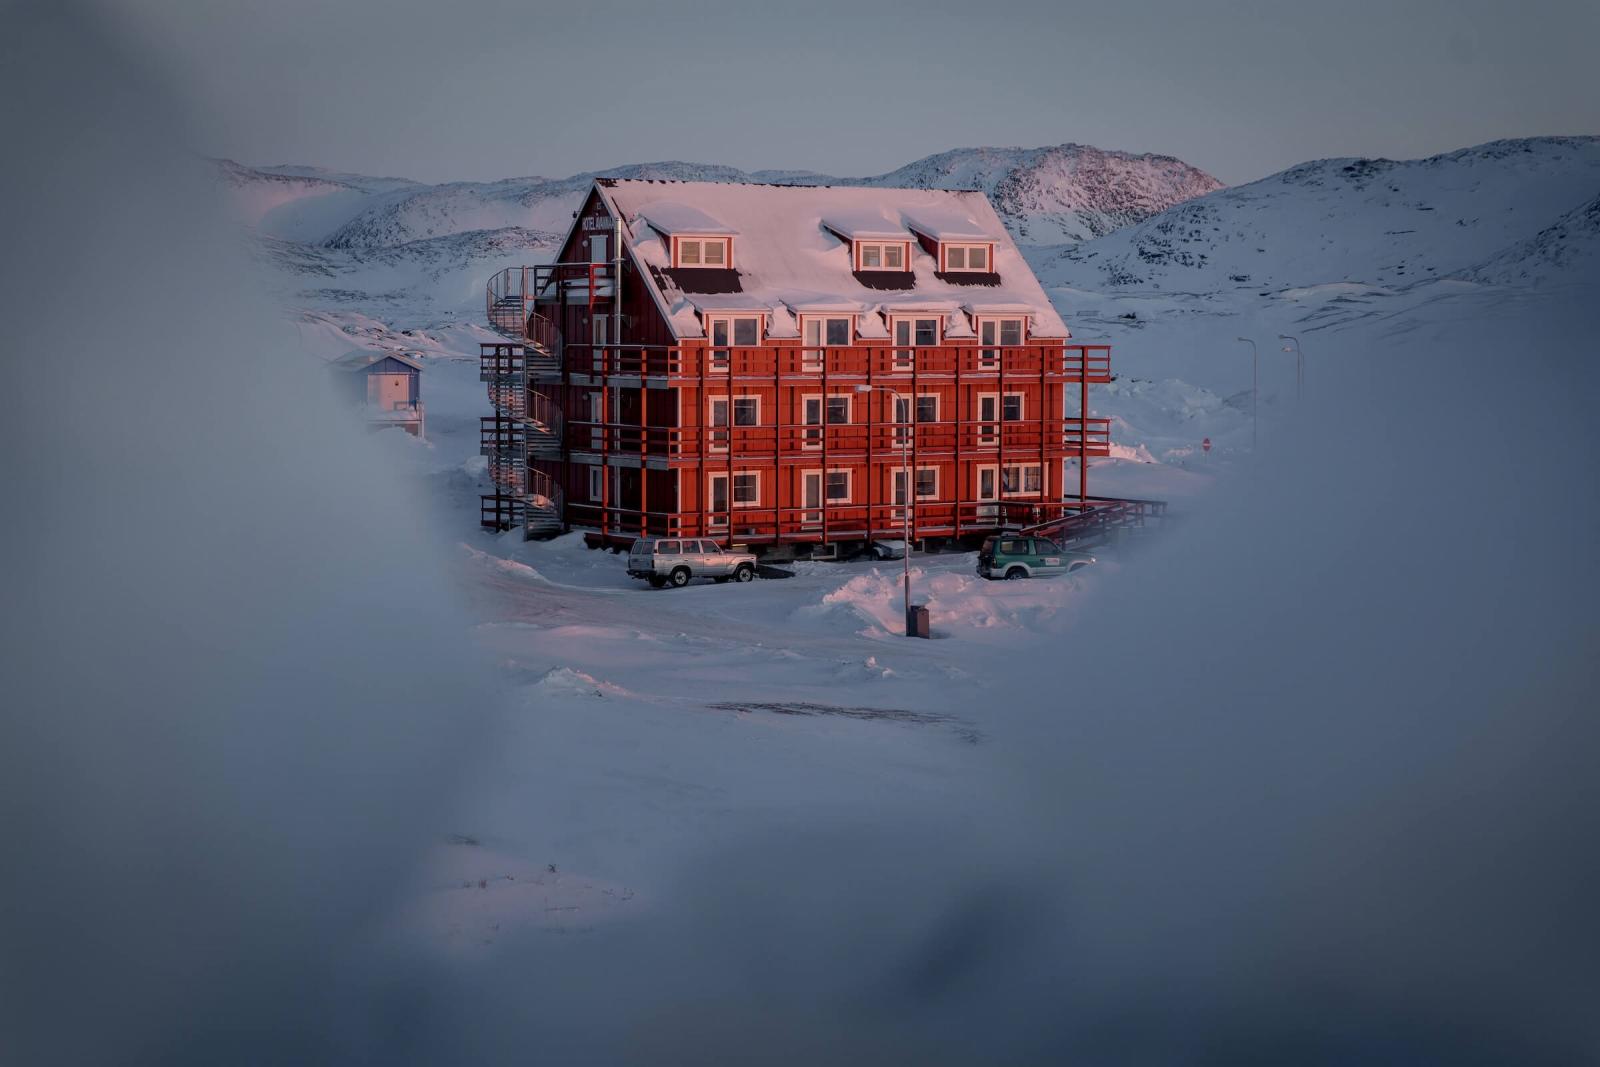 Hotel Avannaa in Ilulissat in Greenland. Photo by Mads Pihl - Visit Greenland